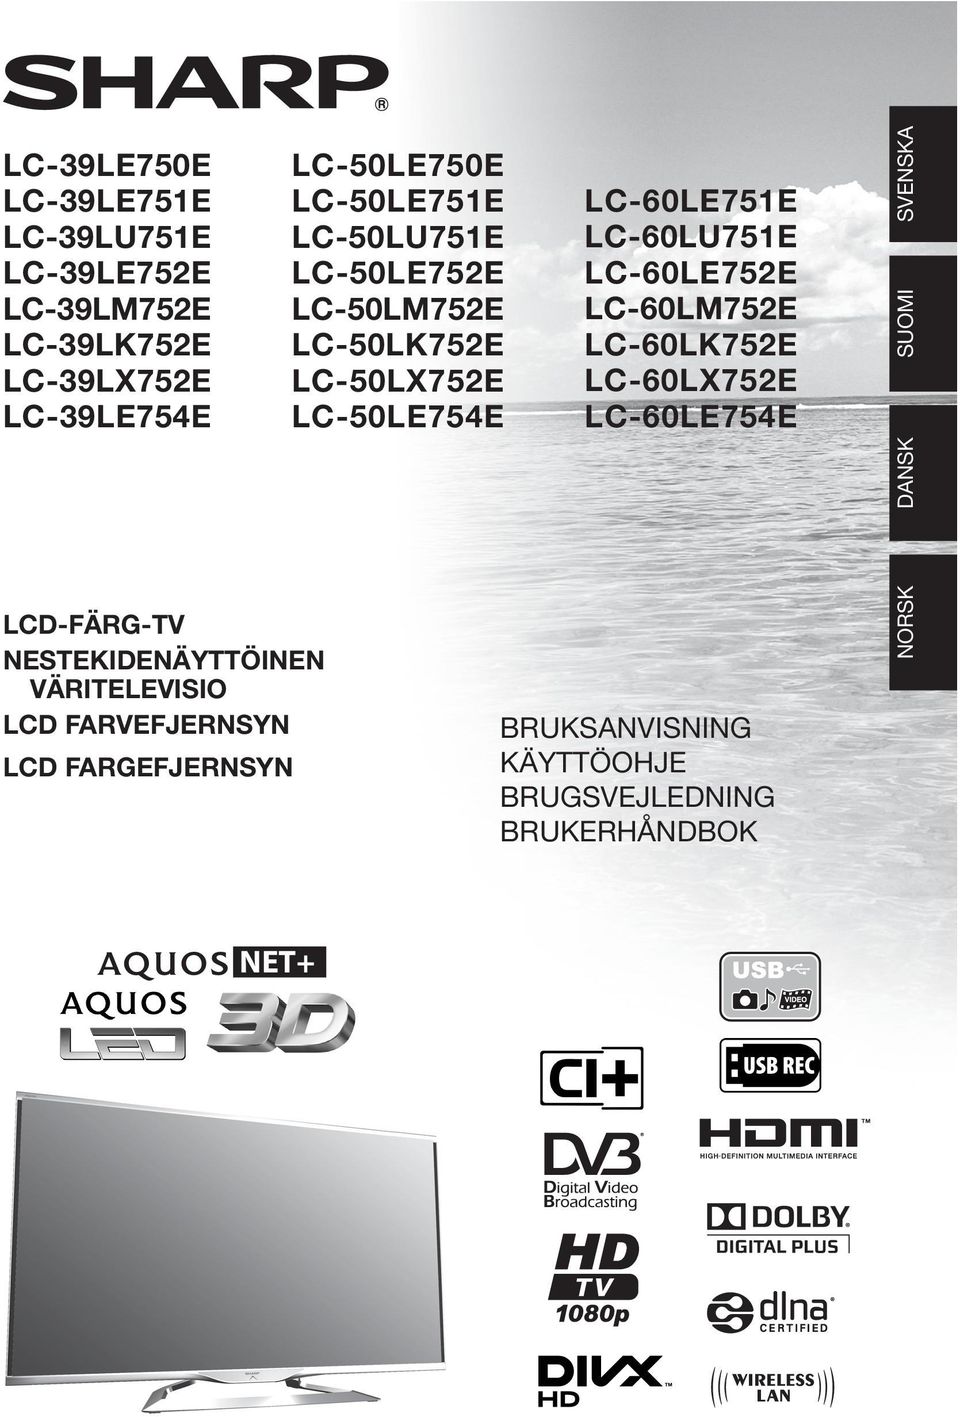 LC-60LE752E LC-60LM752E LC-60LK752E LC-60LX752E LC-60LE754E SVENSKA SUOMI DANSK LCD-FÄRG-TV